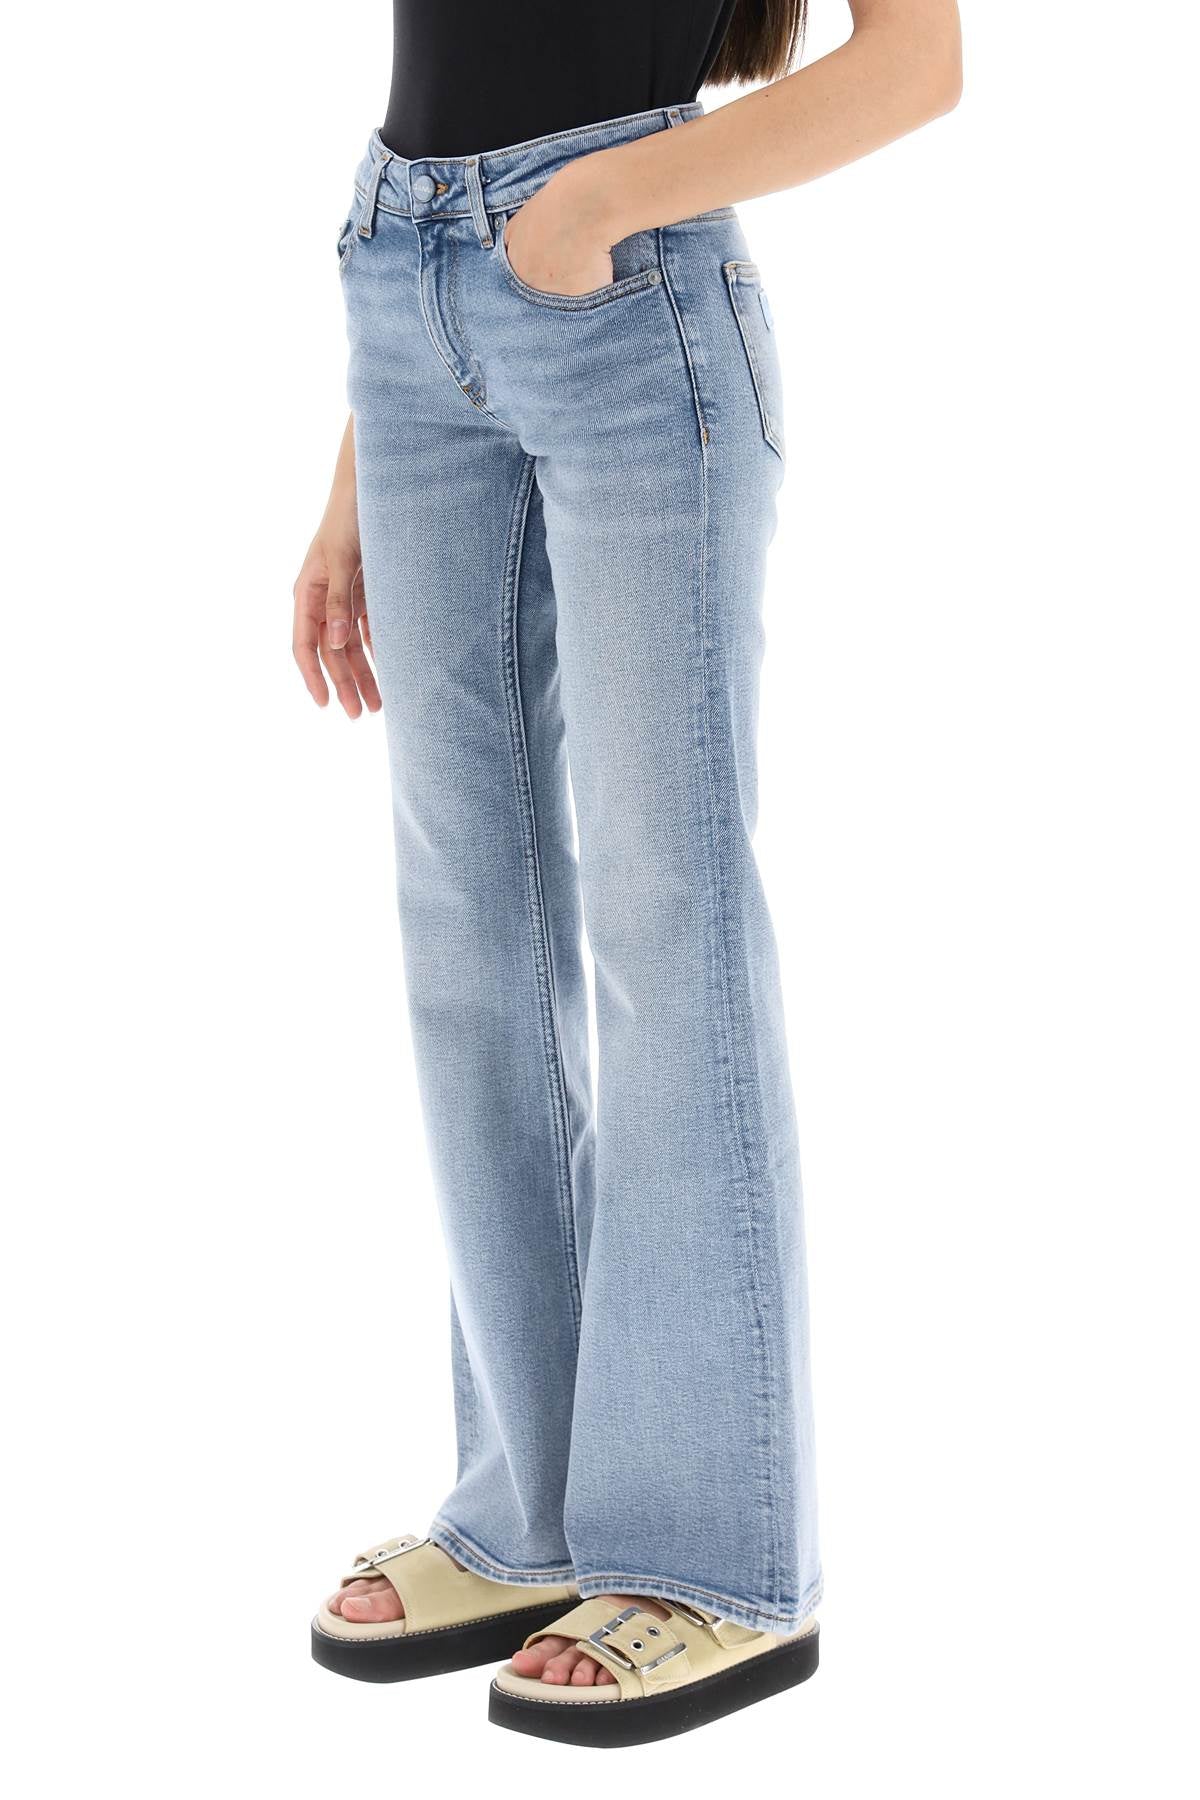 Ganni 'iry' jeans with light wash